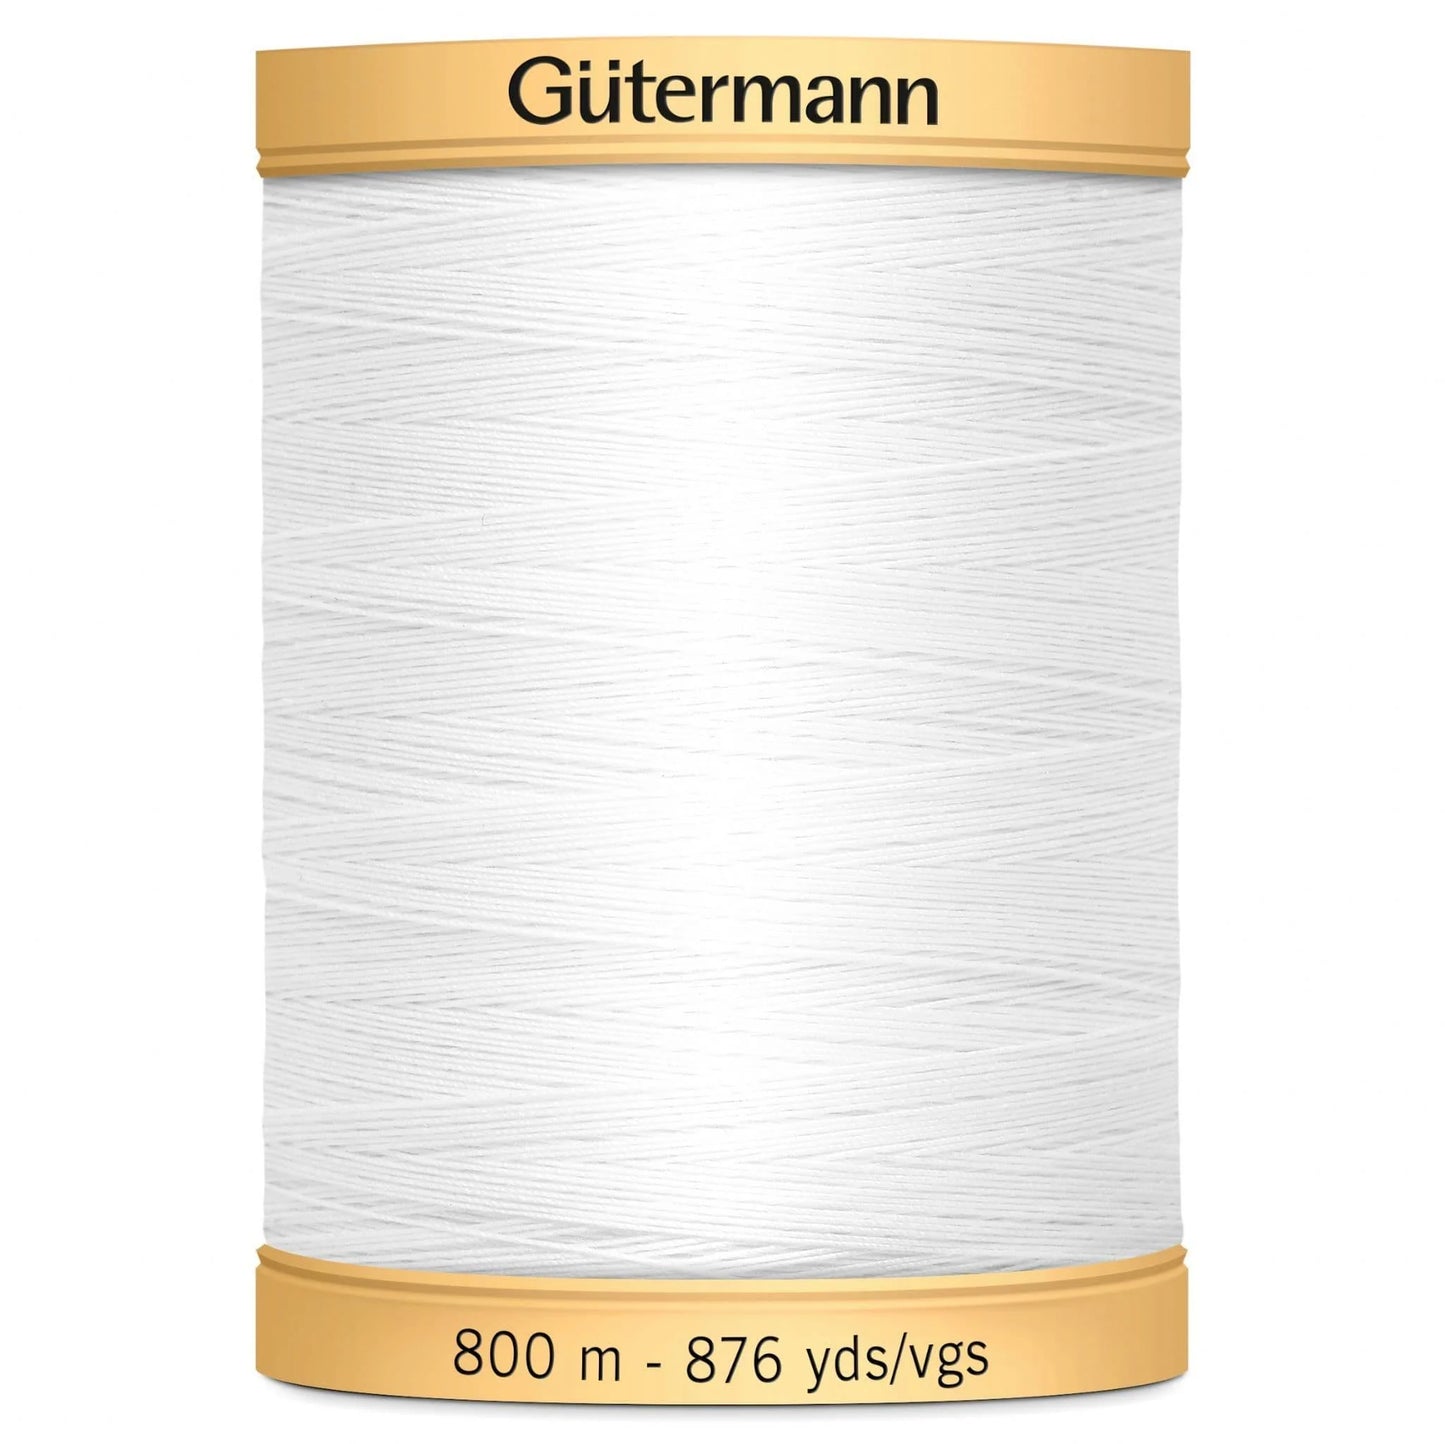 5709 Gutermann Natural Cotton Thread 800m - White